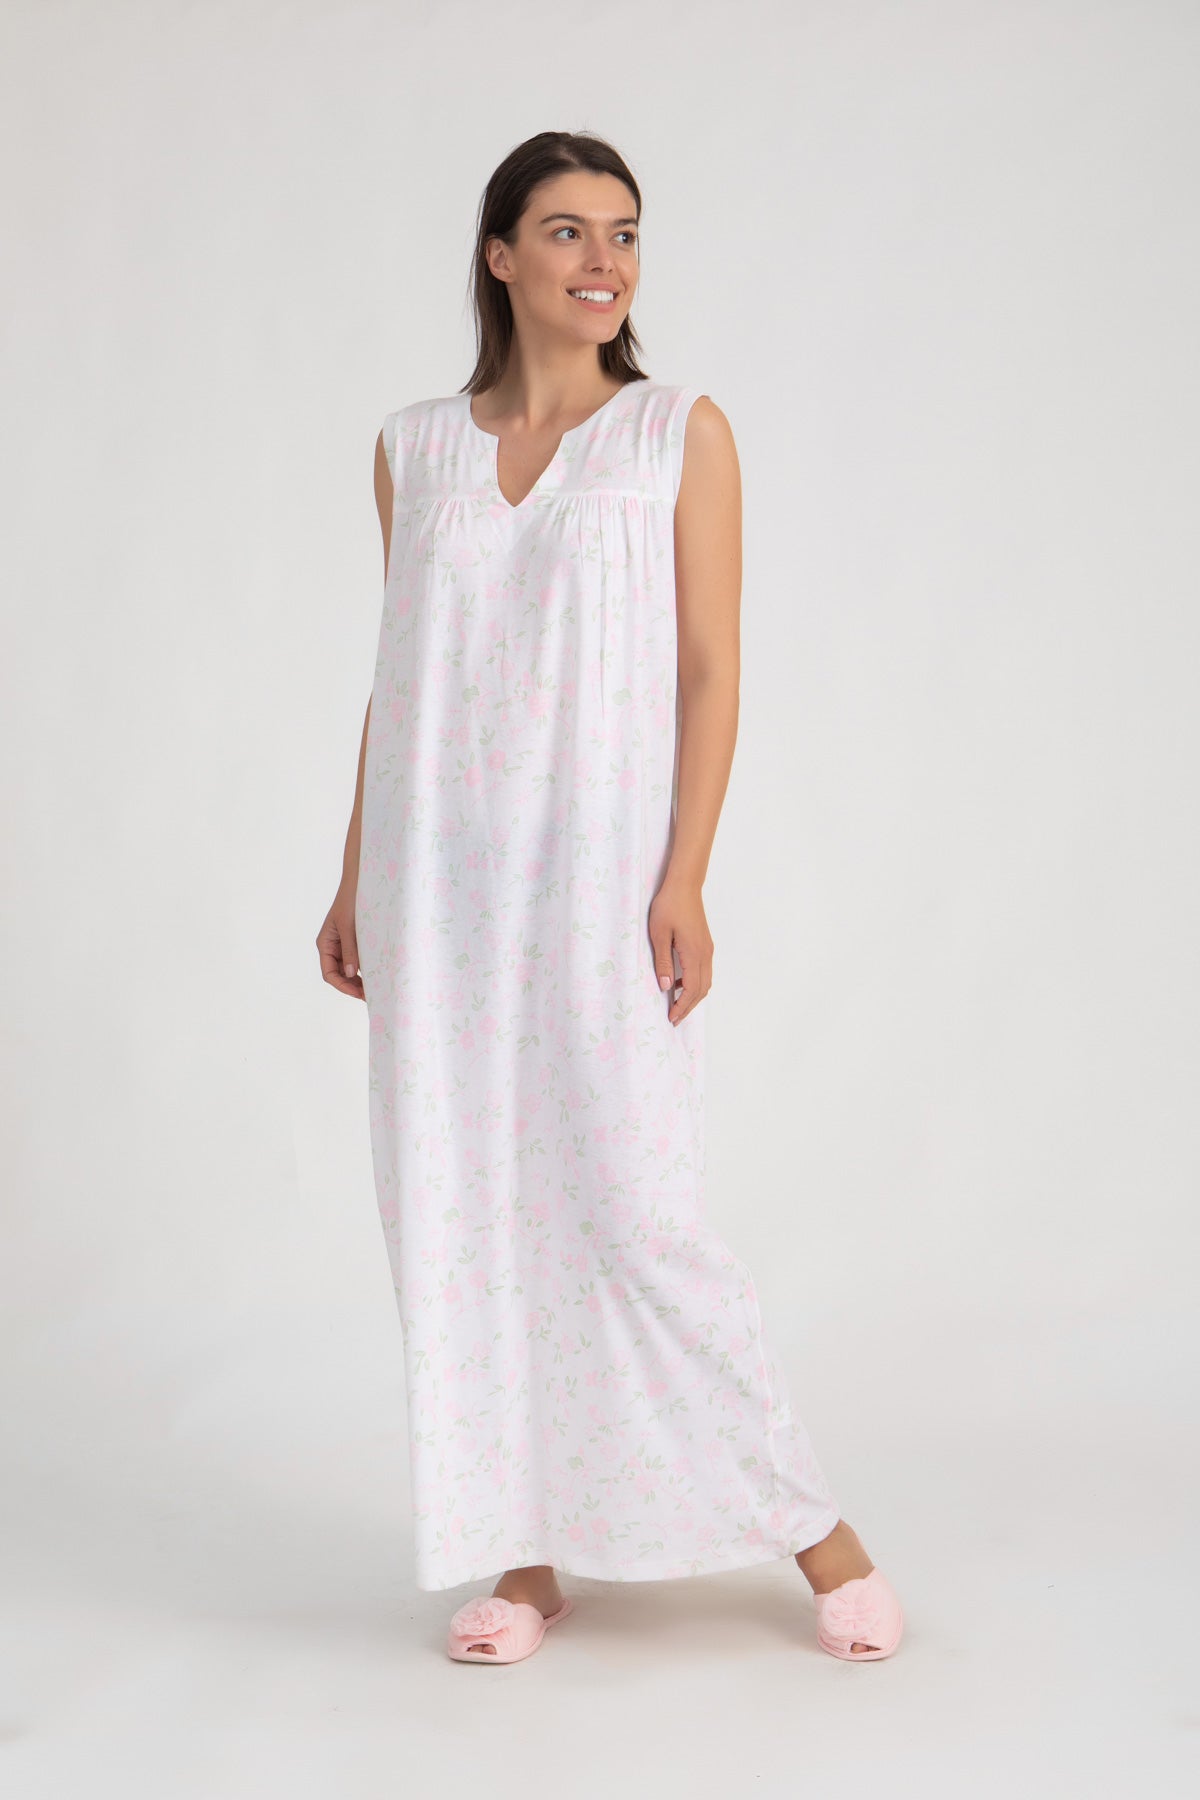 Sleevless Daisy Print Nightgown